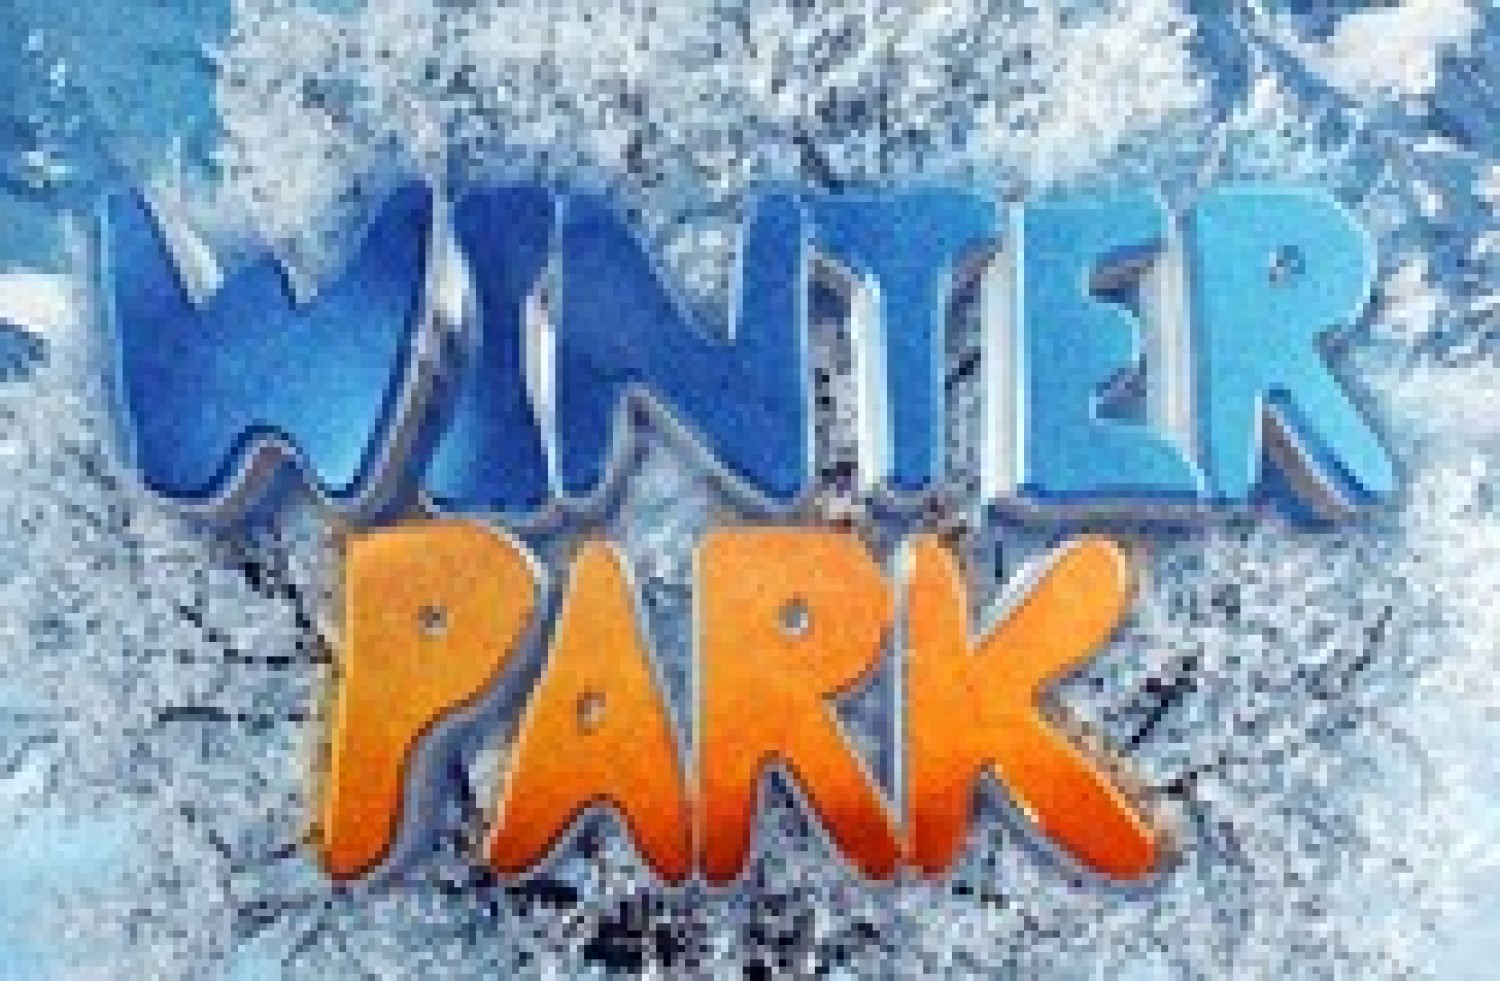 Party report: Winter Park, Best (01-11-2014)